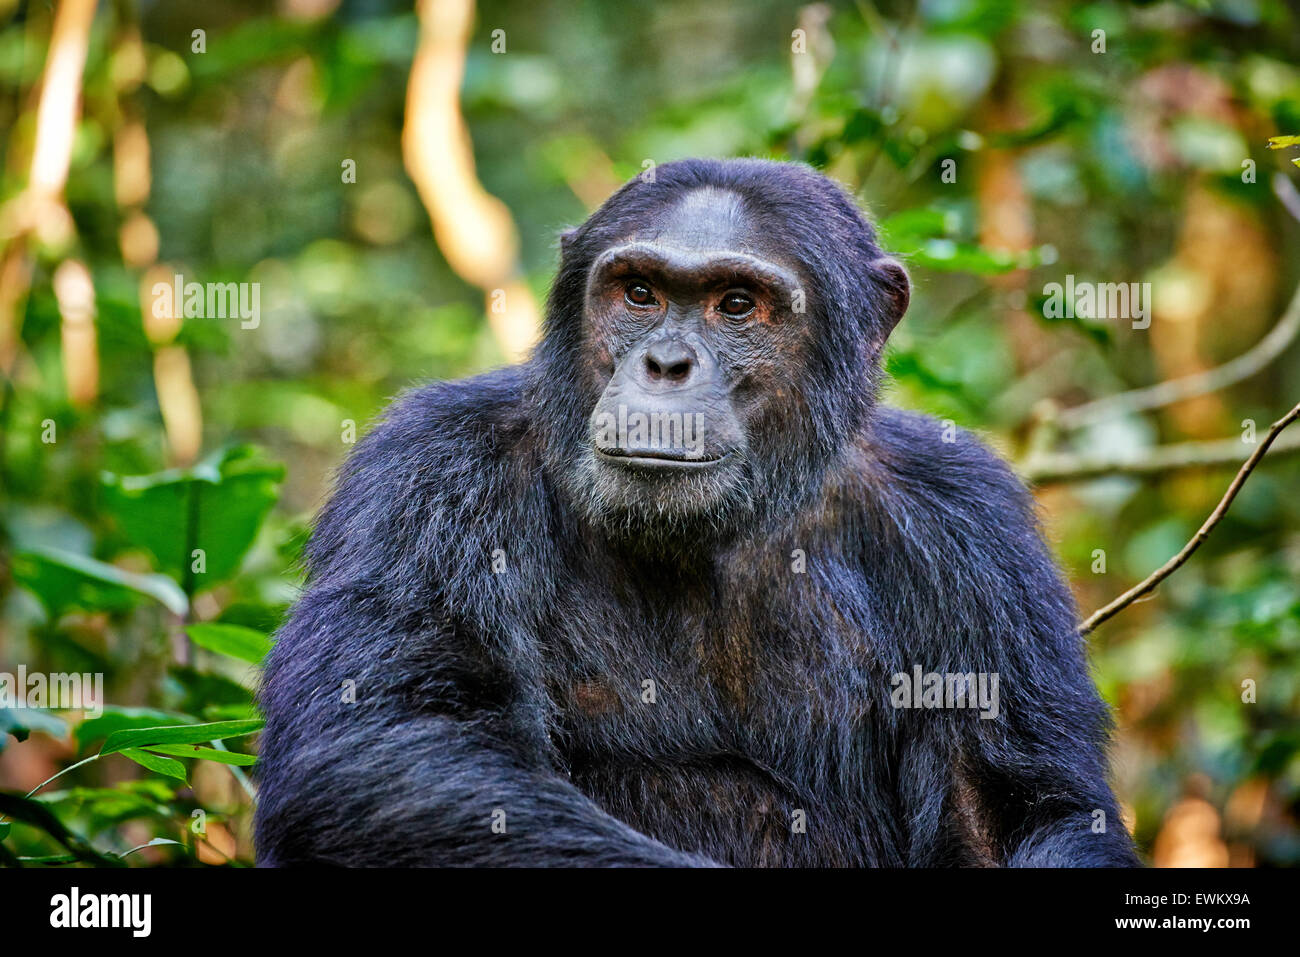 Common chimpanzee, Pan troglodytes, Kibale National Park, Fortl Portal, Uganda, Africa Stock Photo